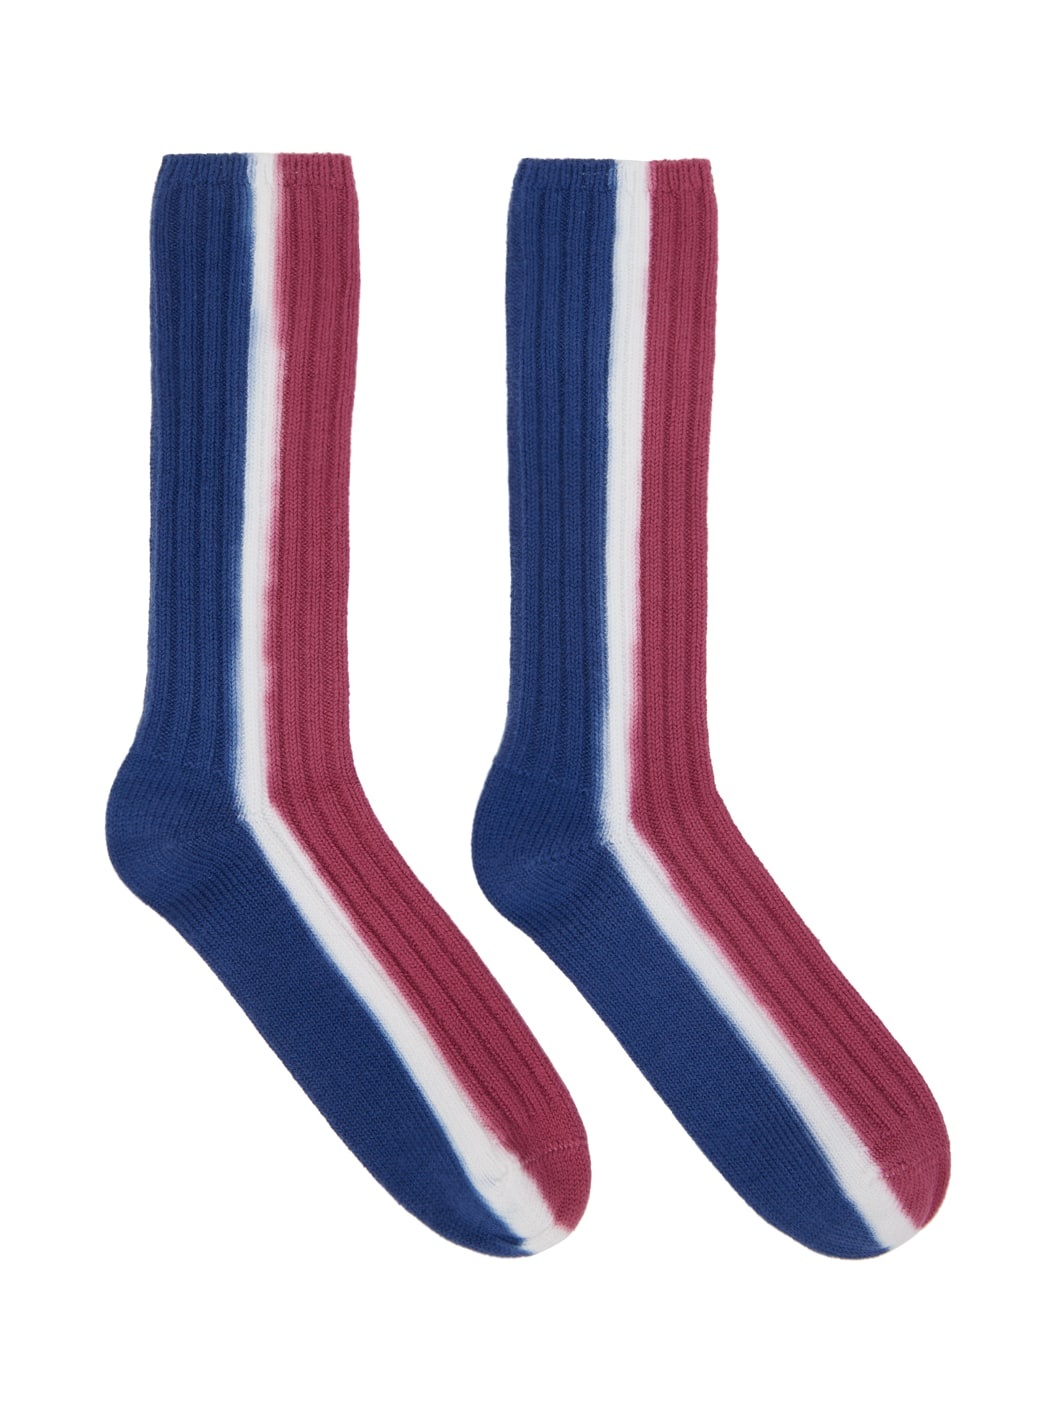 Red & Navy Vertical Dye Socks - 1